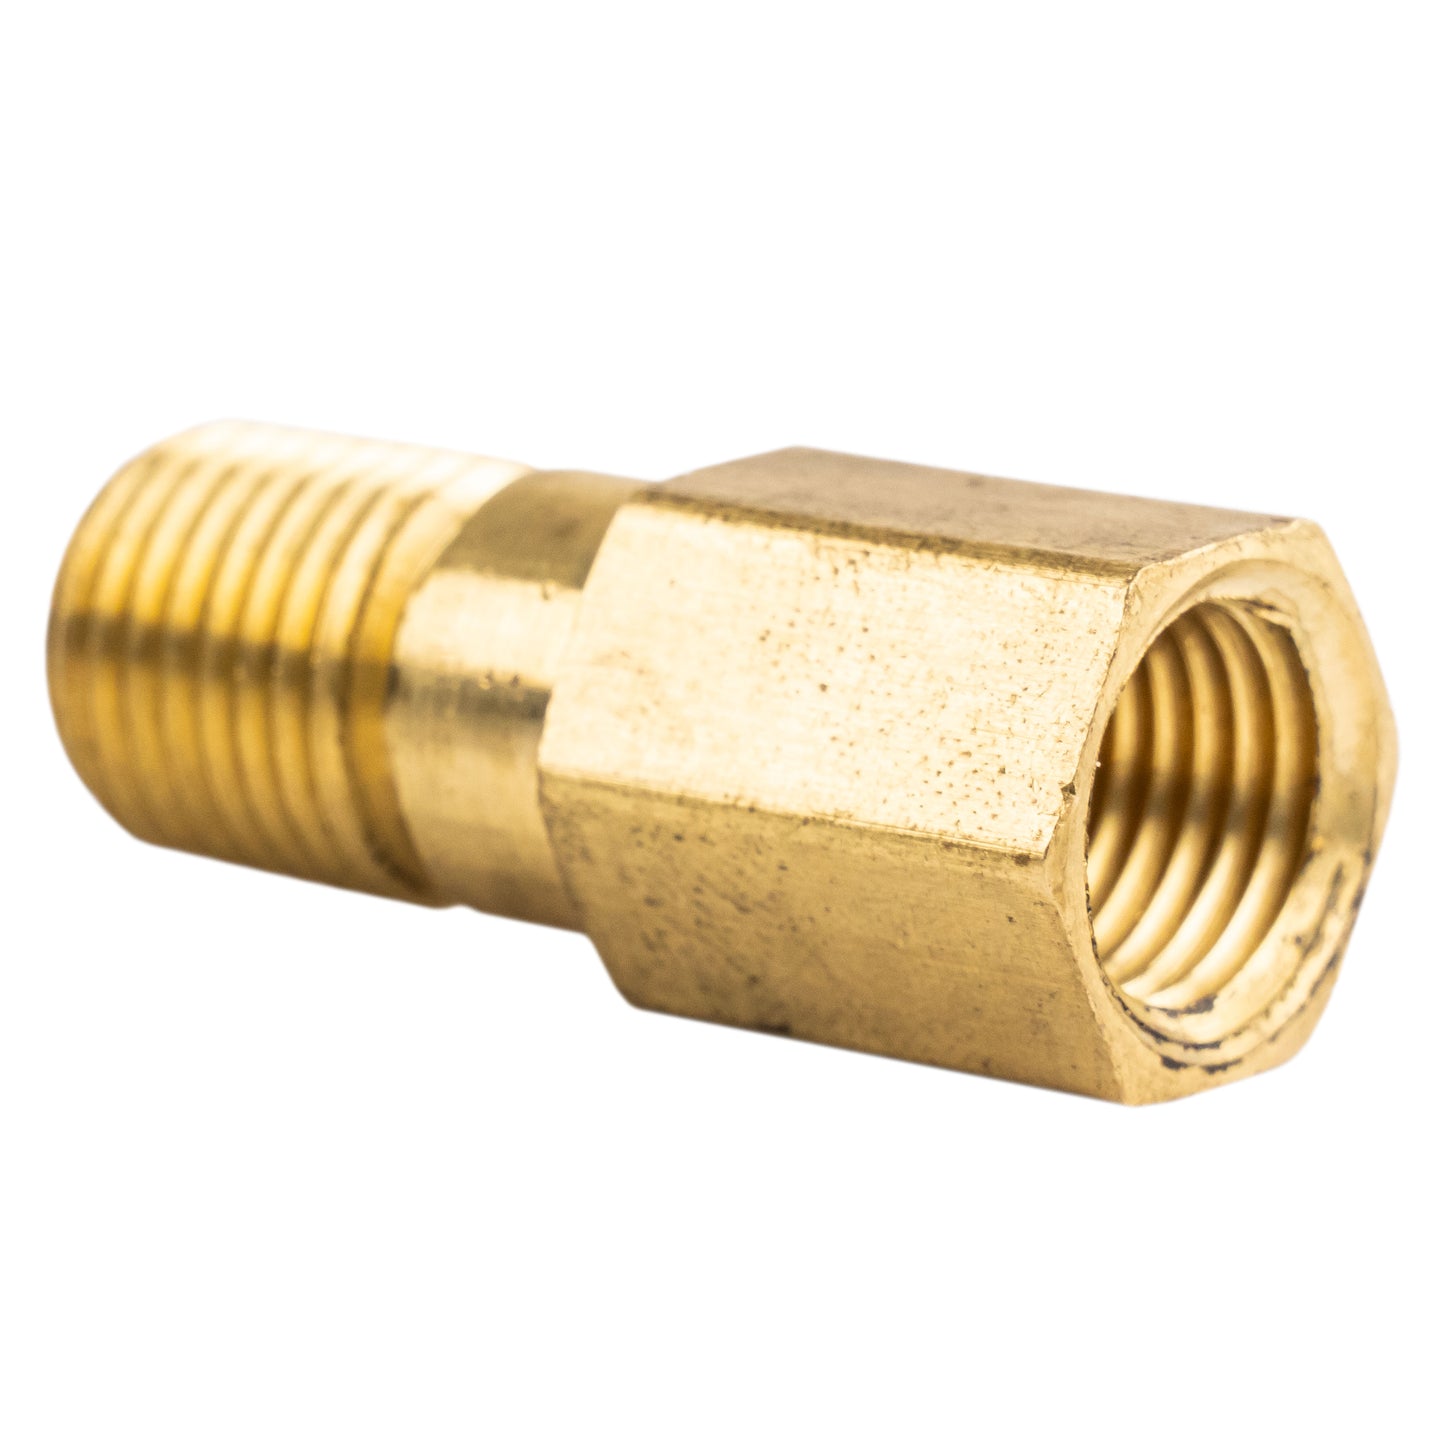 1/4" NPT Extender Pipe Fitting 1-9/16" Long Solid Brass Pressure Gauge Adapter